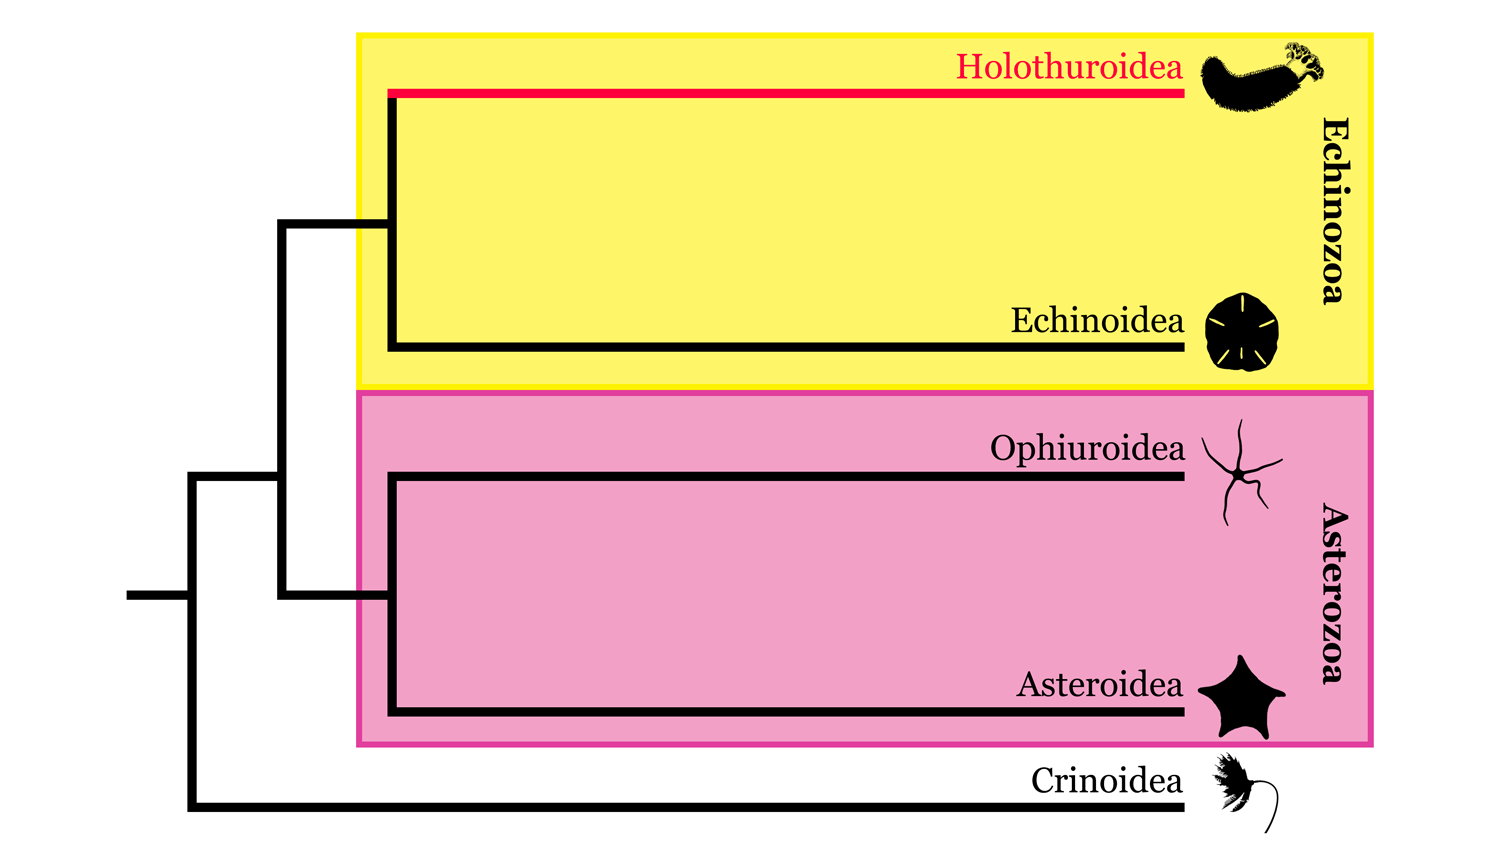 Image of Echinodermata phylogeny, highlighting where Holothuroidea sits